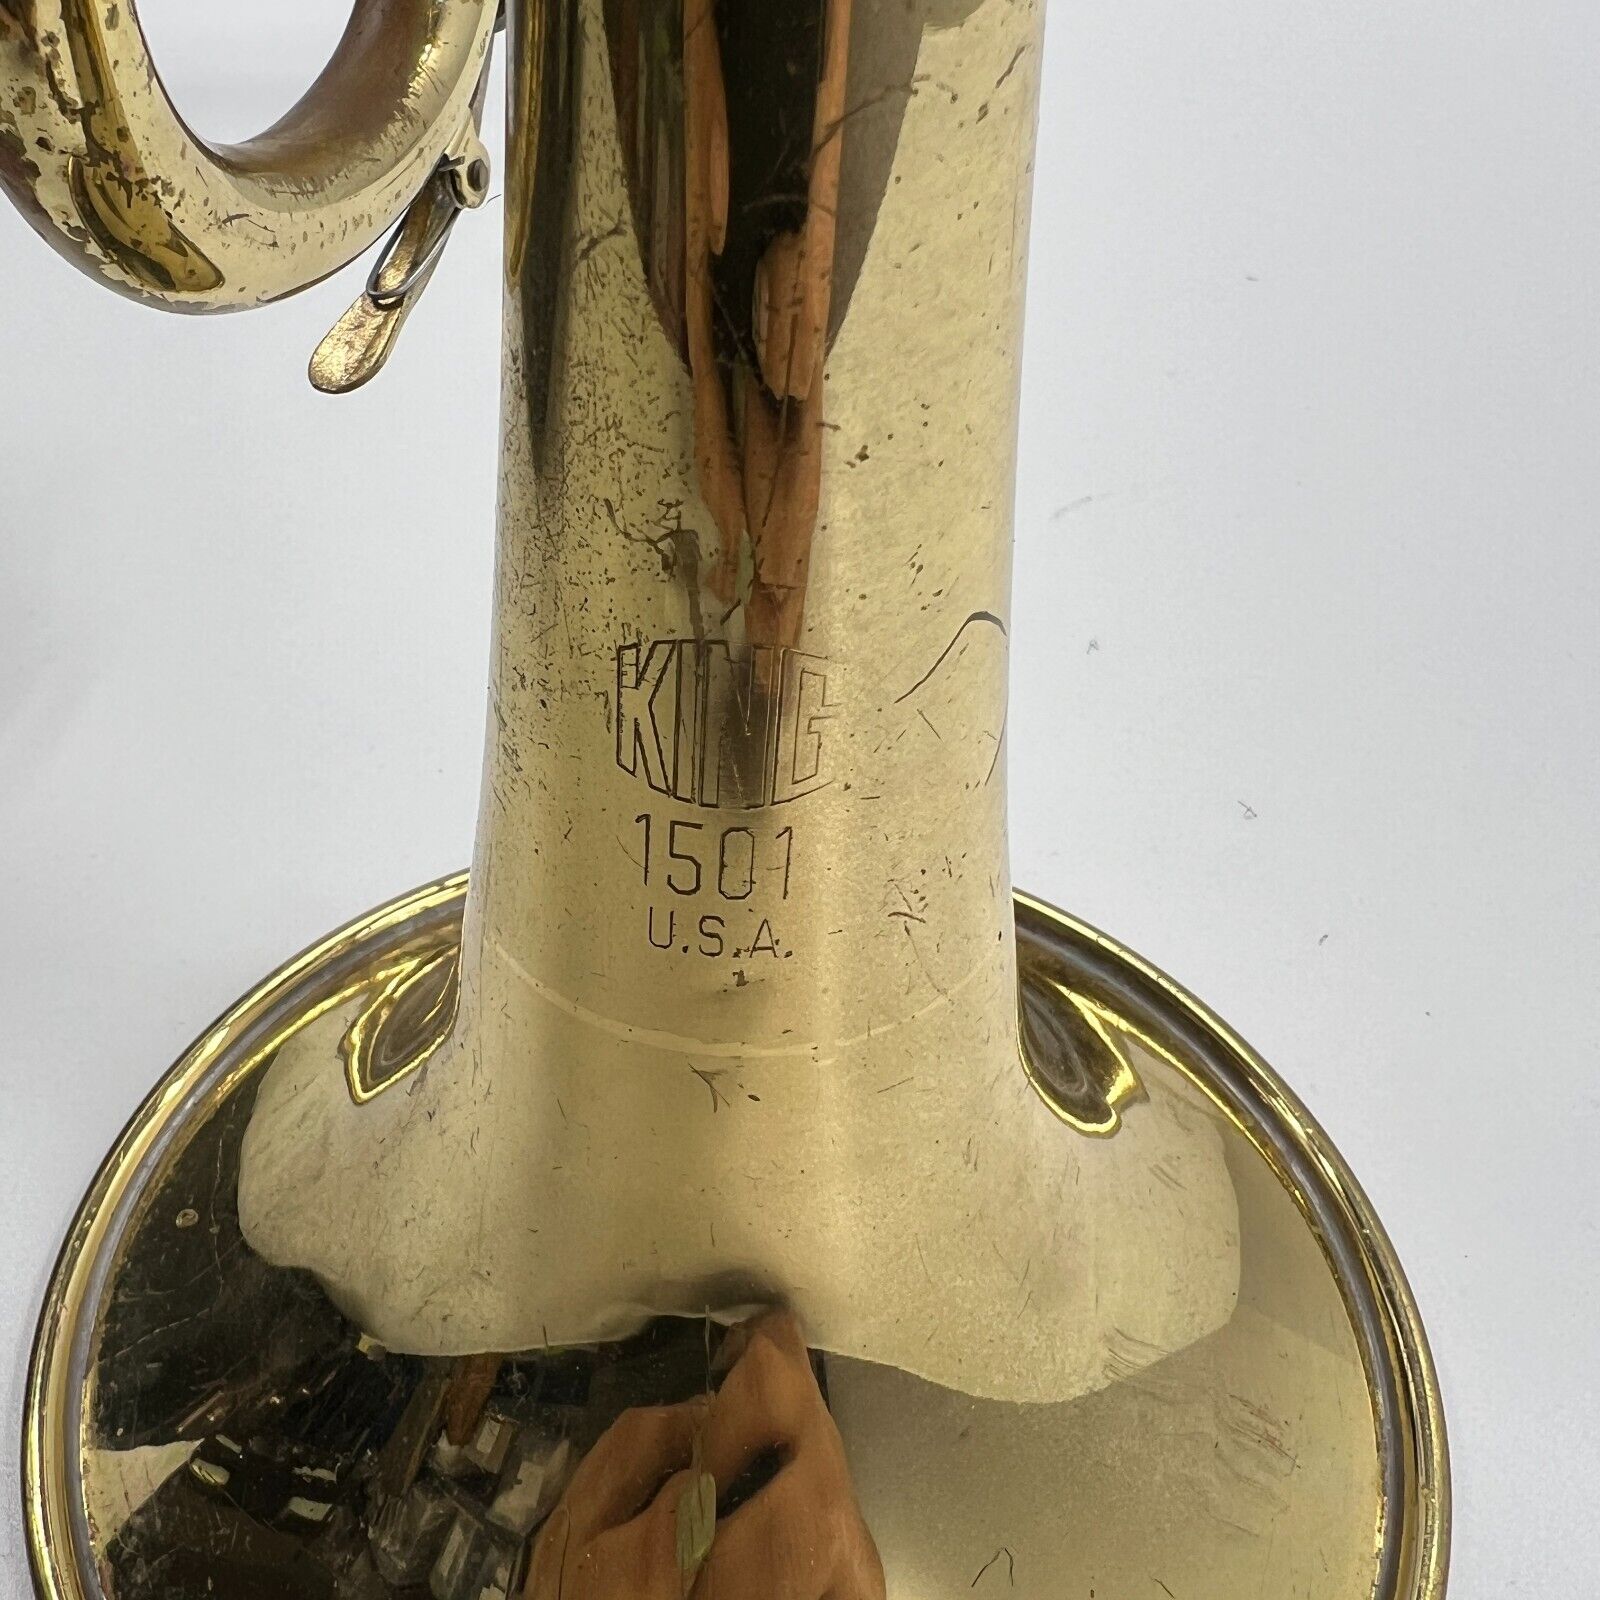 King 1501 U.S.A. Trumpet in Case for Restoration 3